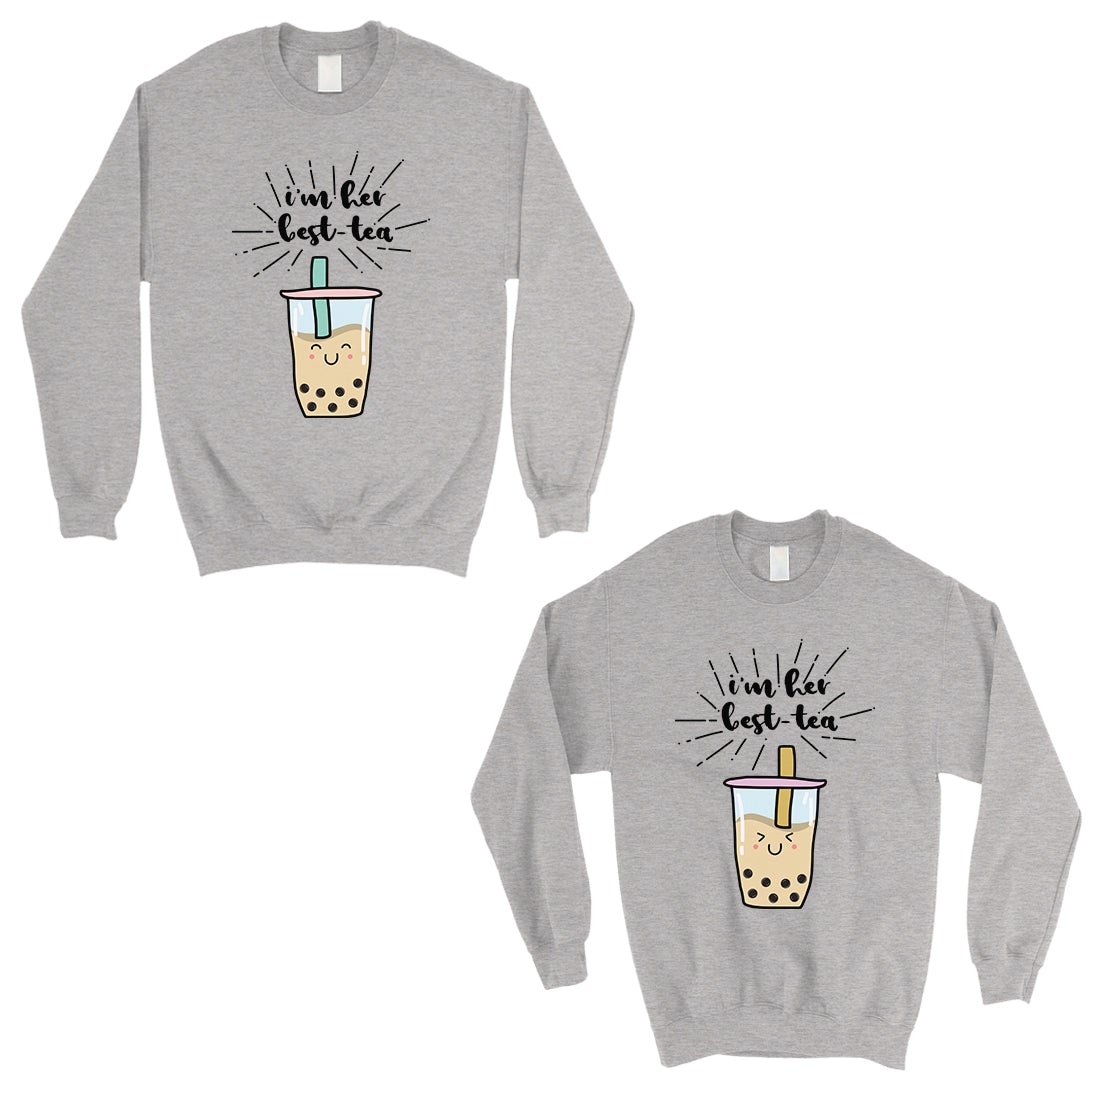 Boba Milk Best-Tea Cute BFF Matching Sweatshirts Birthday Gift Gray